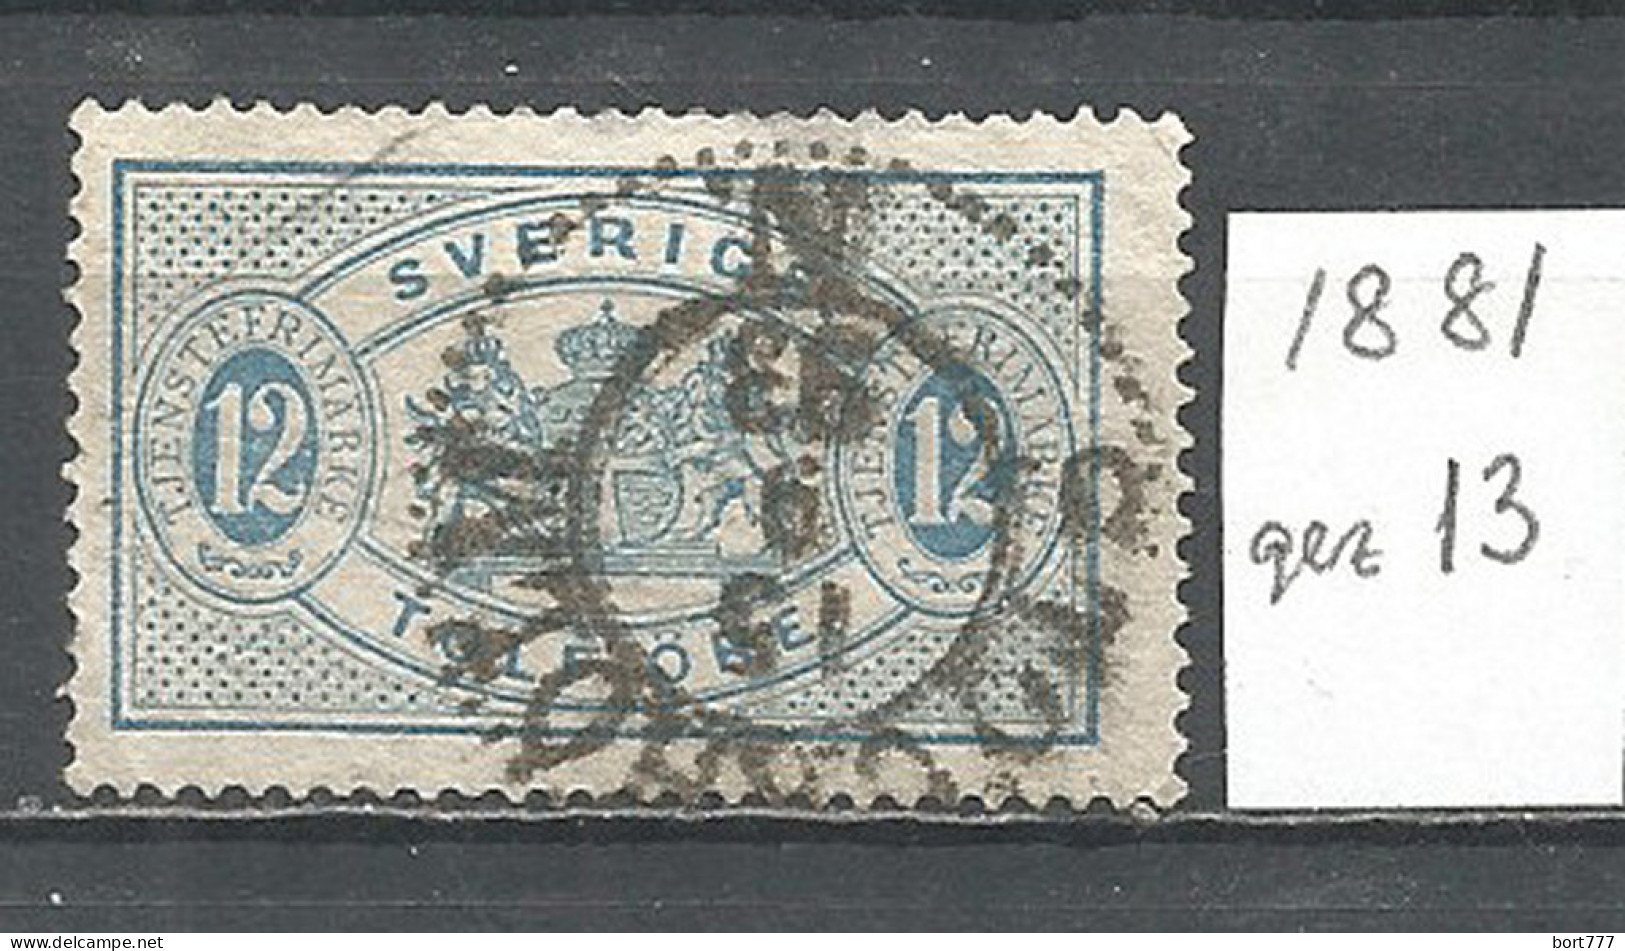 Sweden 1881 Used Stamp PERF.13 - Gebraucht